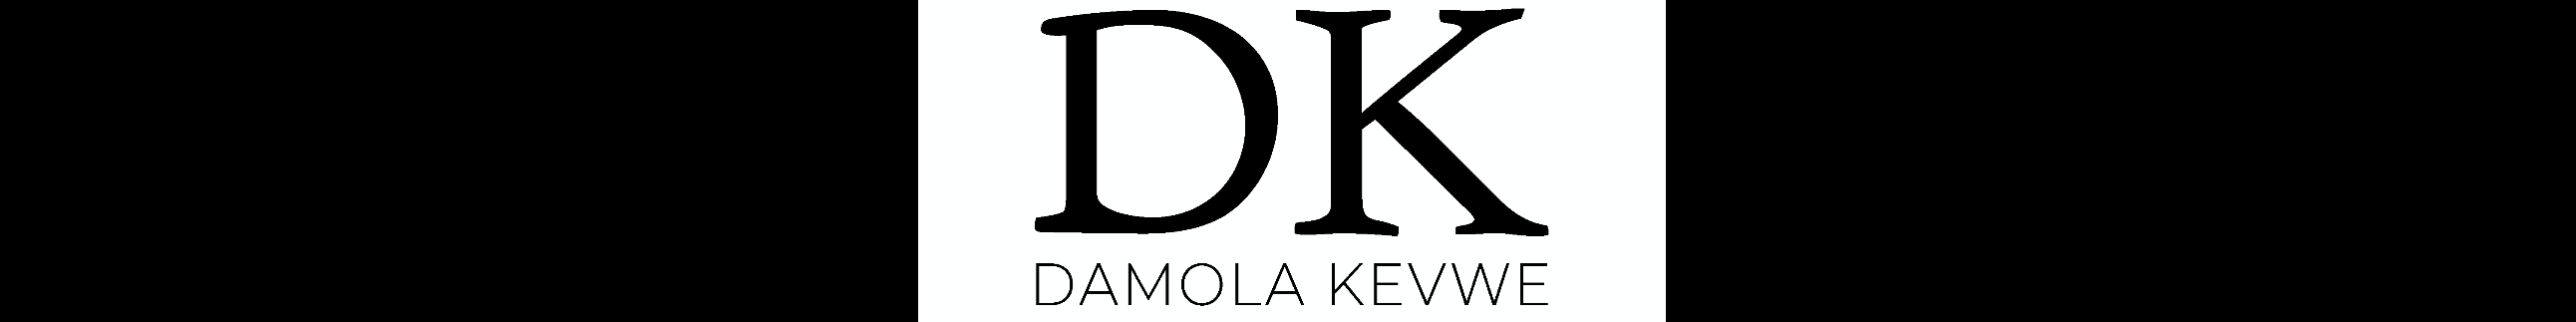 Damola Kevwe's profile banner